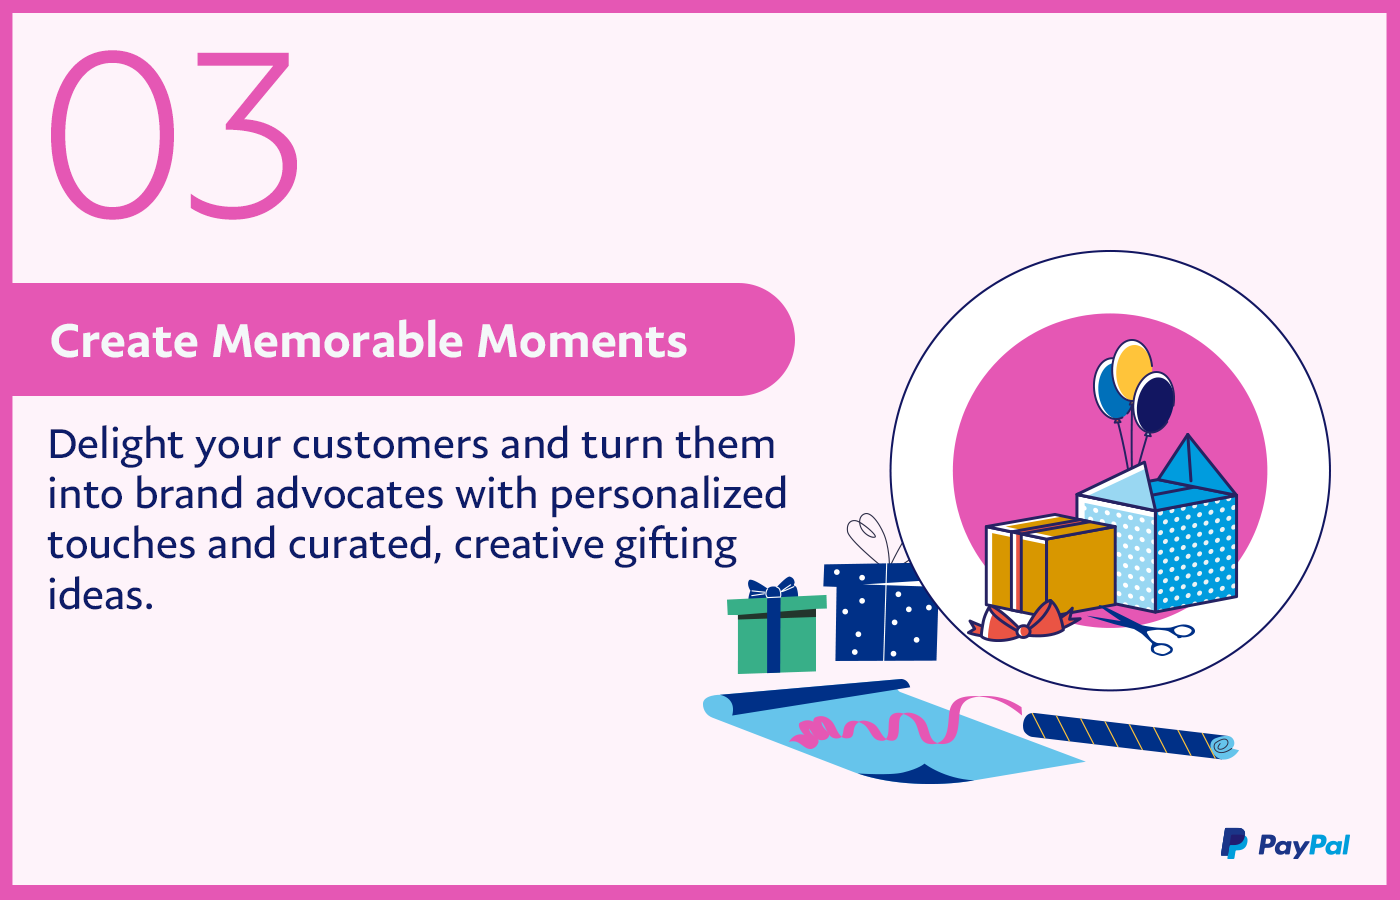 Create Memorable Moments Graphic